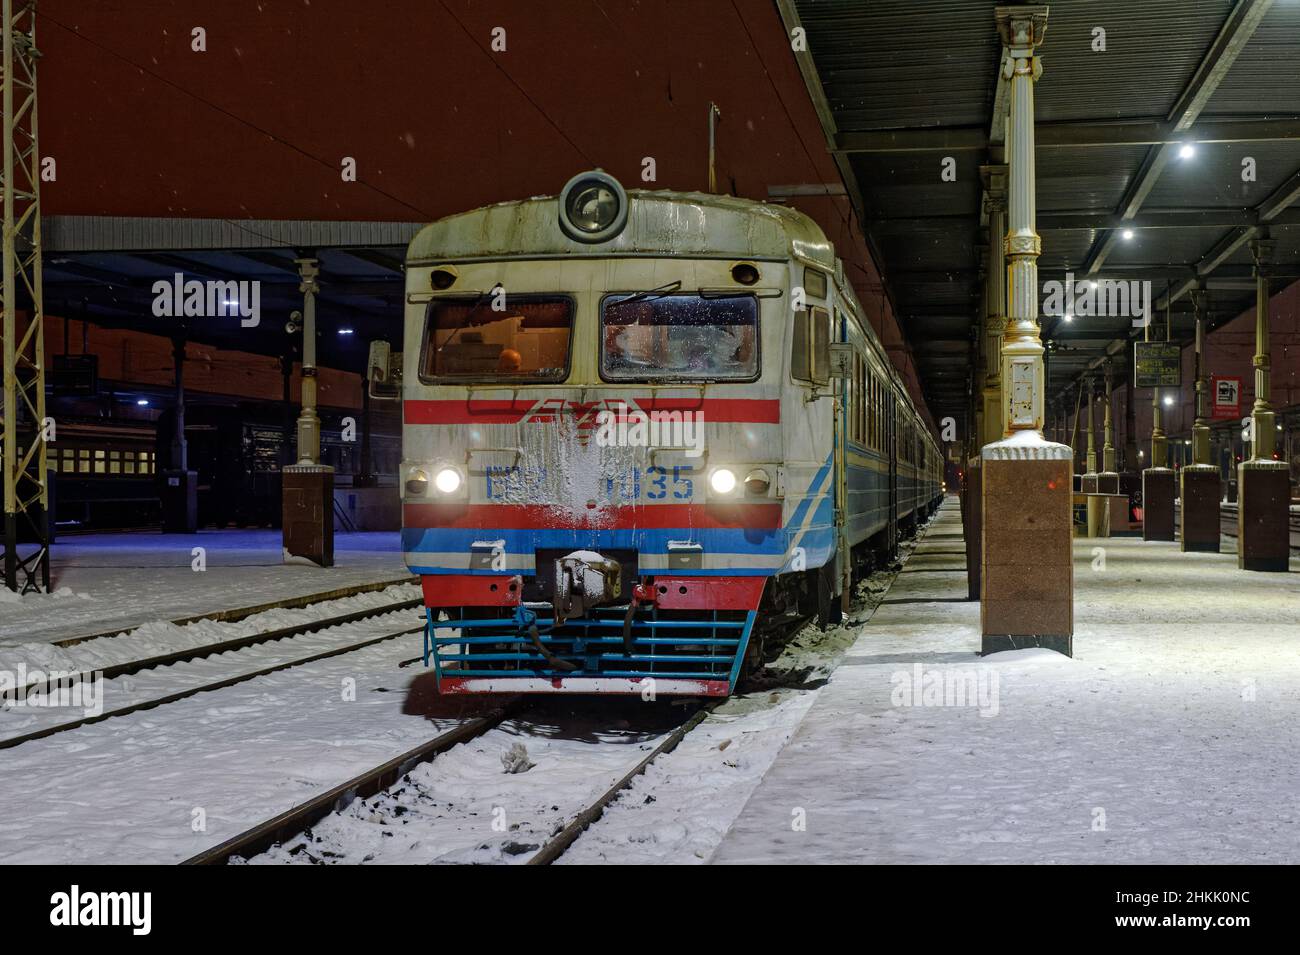 Kharkiv, Ukraine - January 28, 2022: Old electric train of Ukrainian Railways stand near the station platform in Kharkiv Passenger Railway Station. Ni Stock Photo